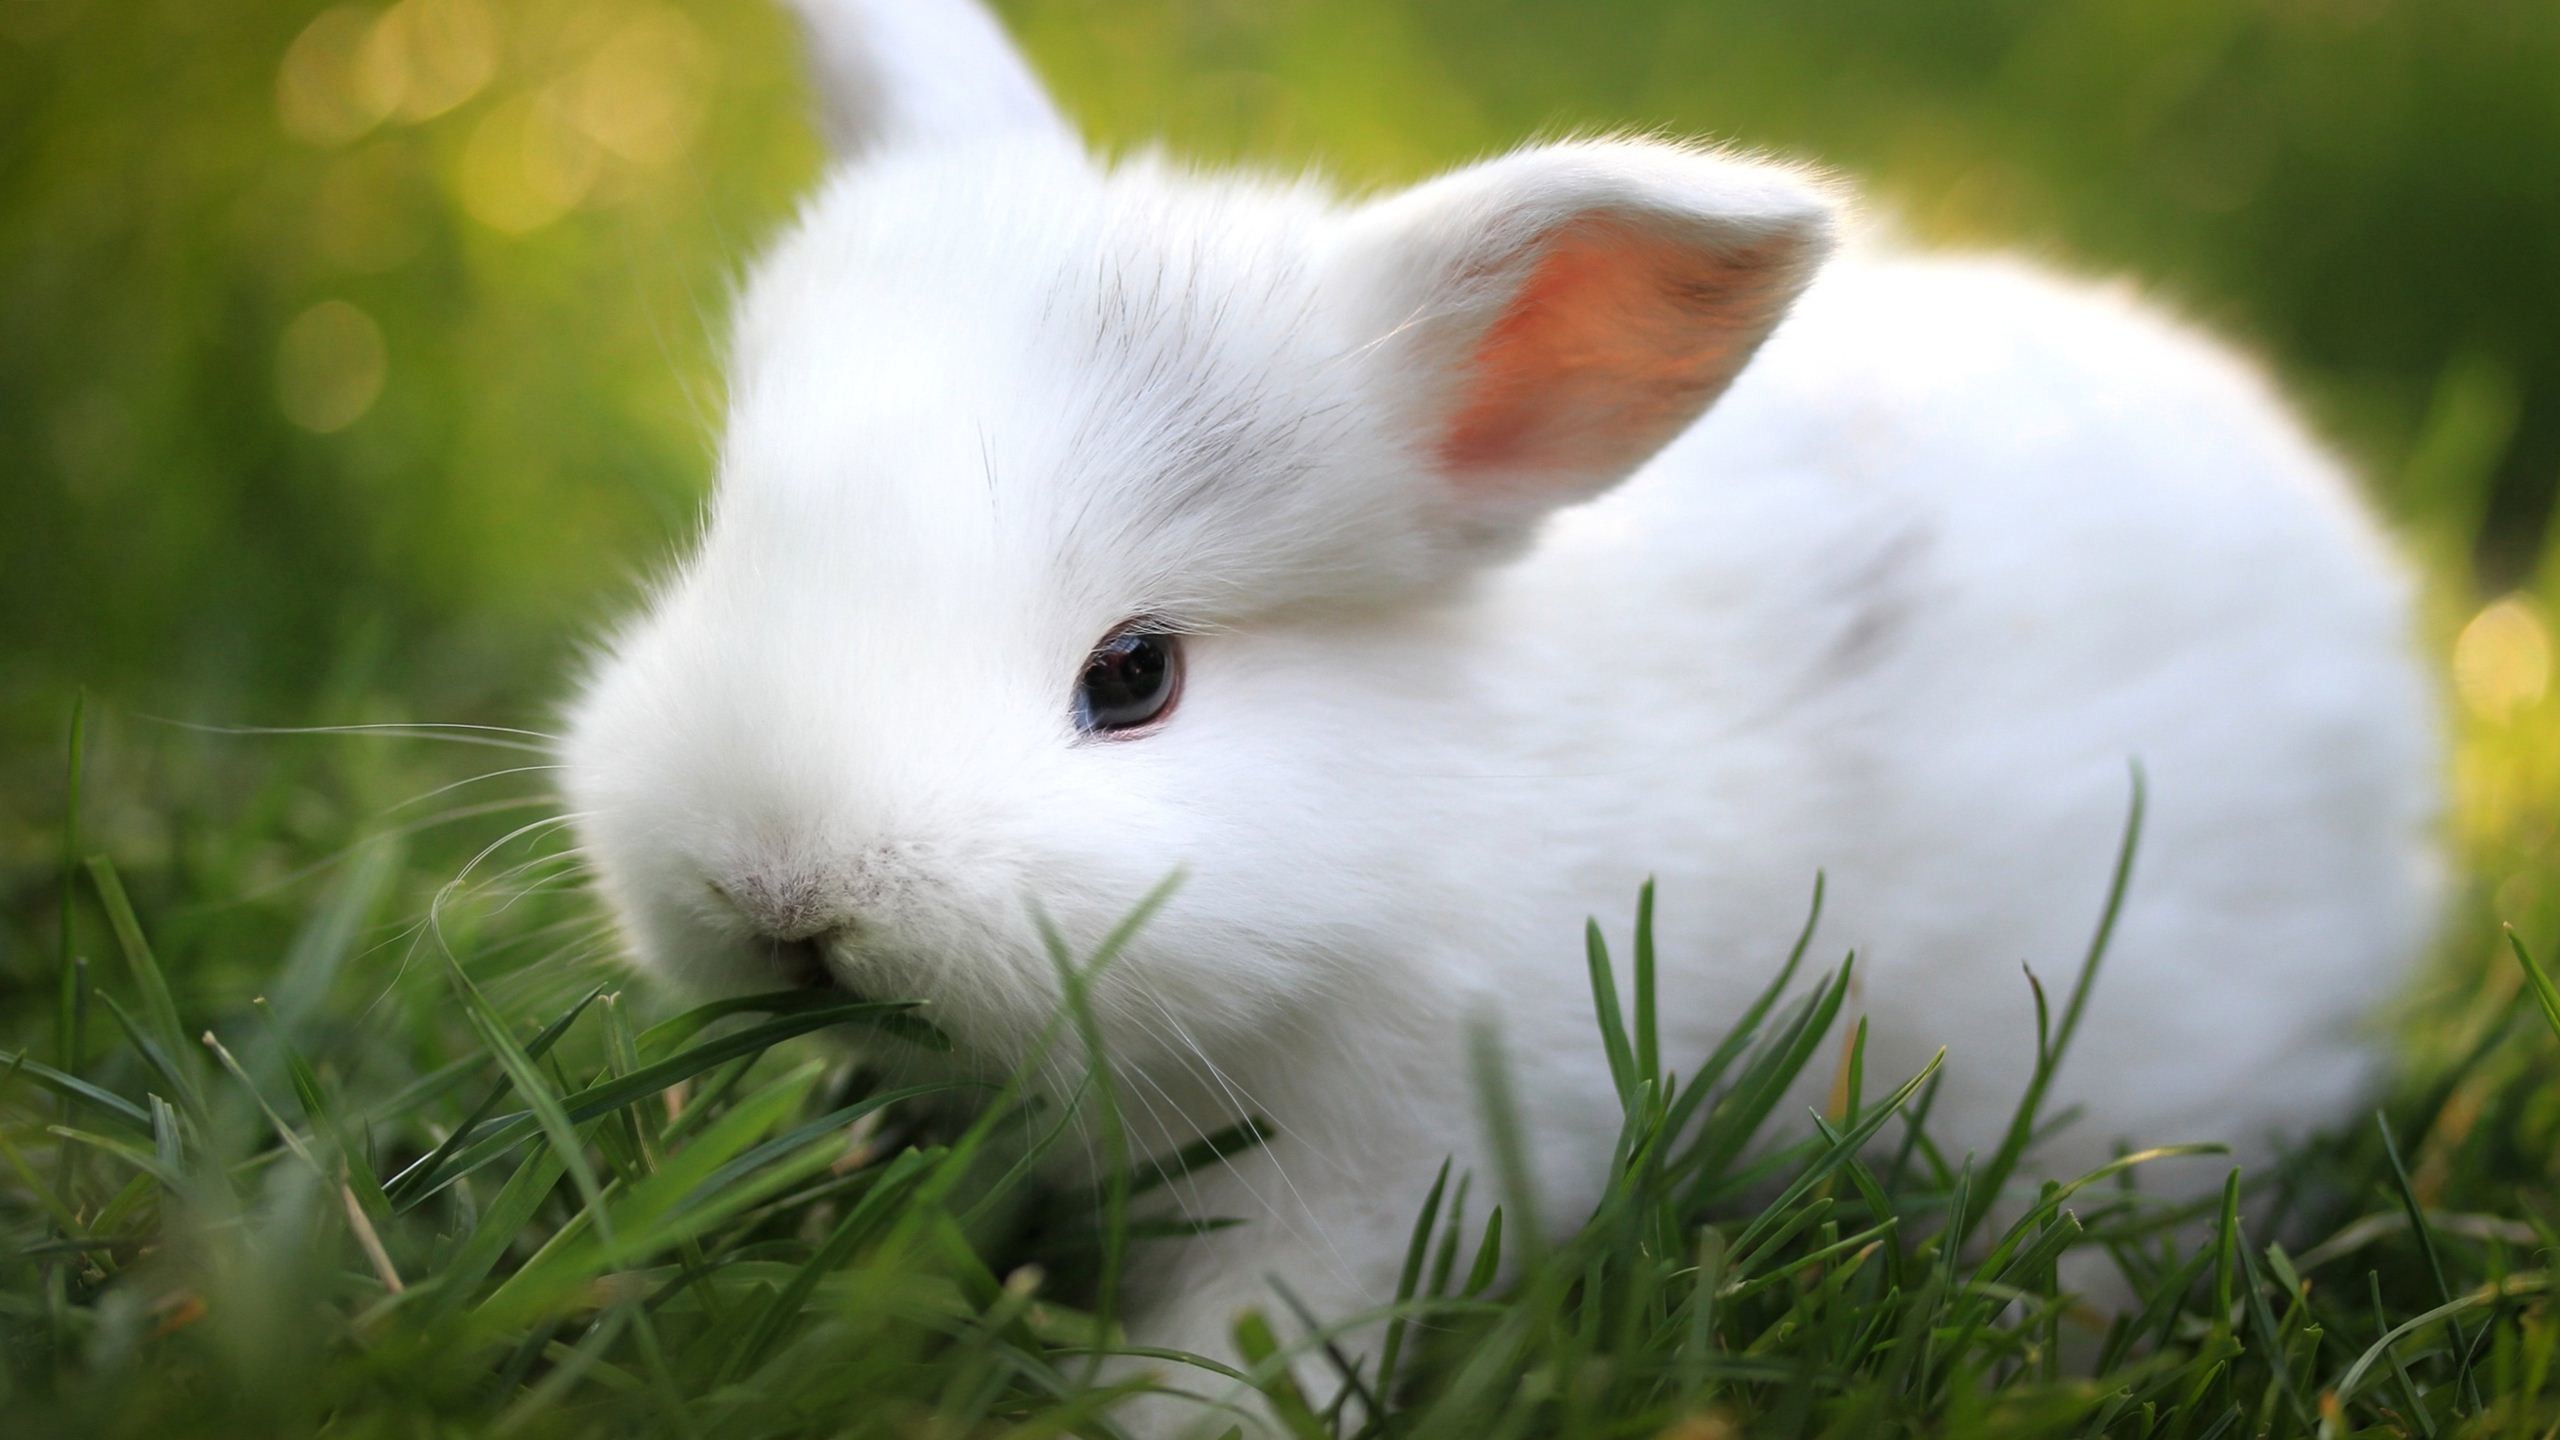 2560x1440 Cute Bunny Wallpapers Wide For Desktop Wallpaper 2560 x 1440 px 1.08 MB  widescren cute rabbit